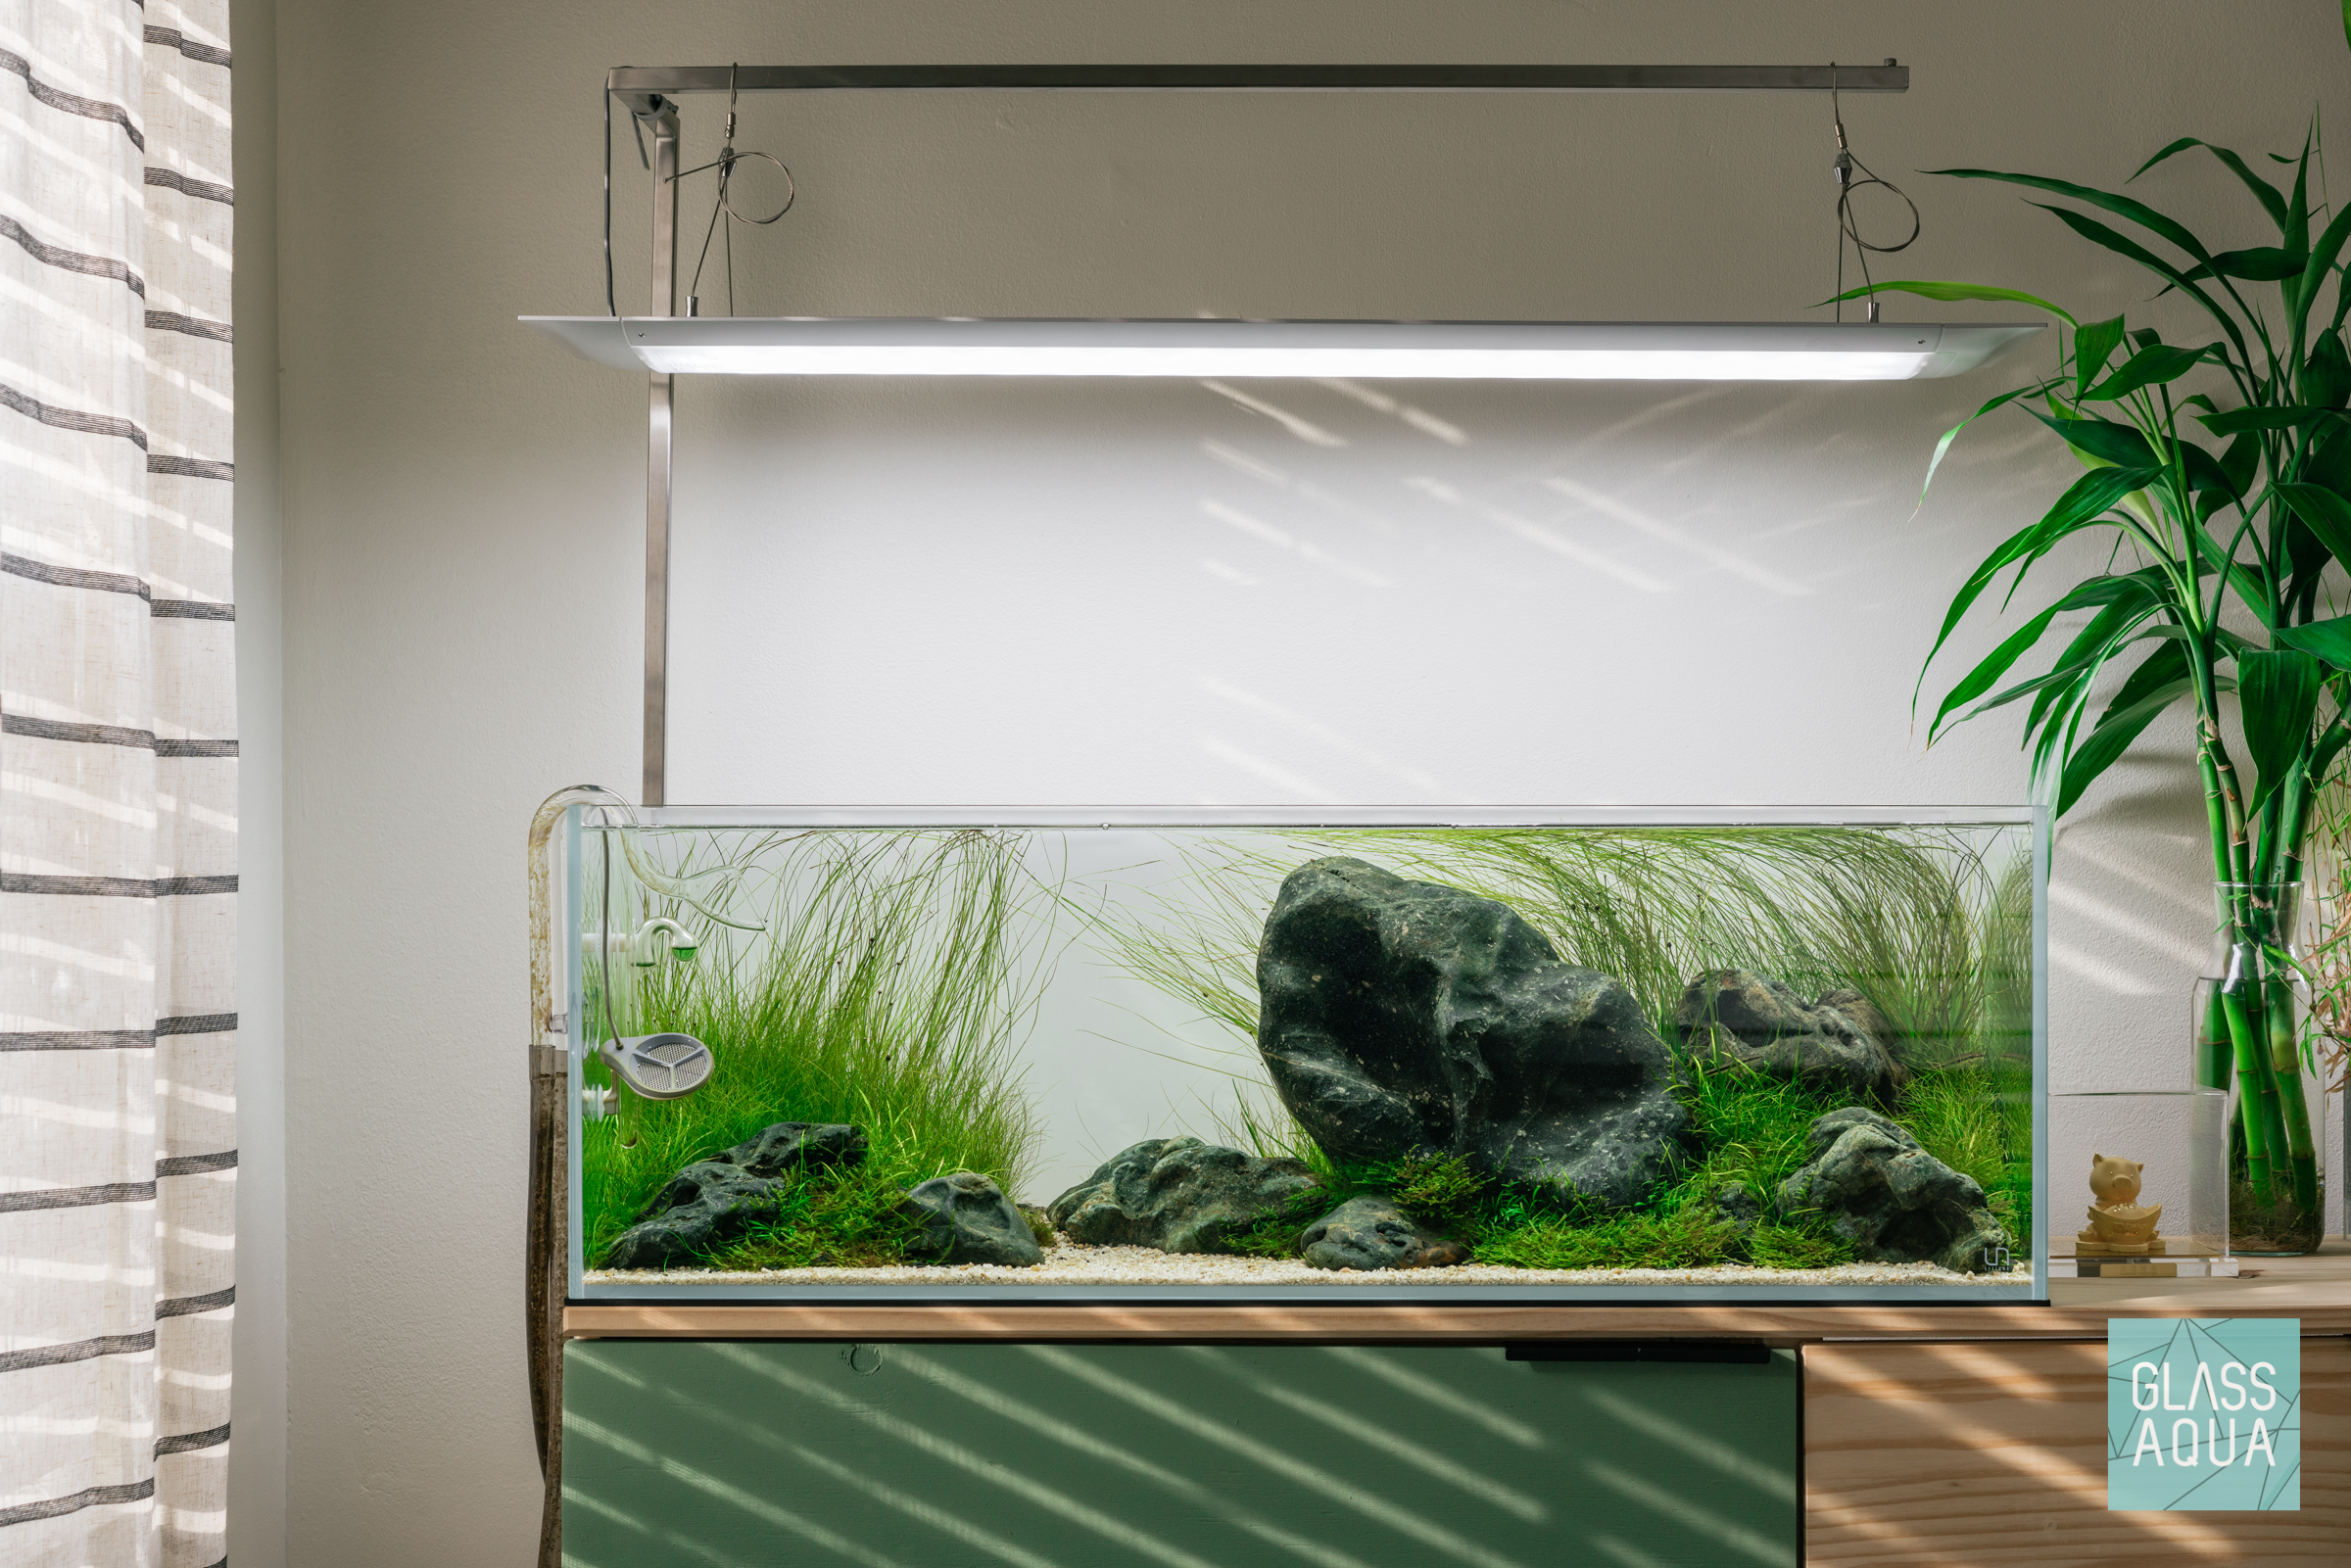 Ultum Nature Systems UNS 90L Long Bookshelf Glass Aquarium Fish